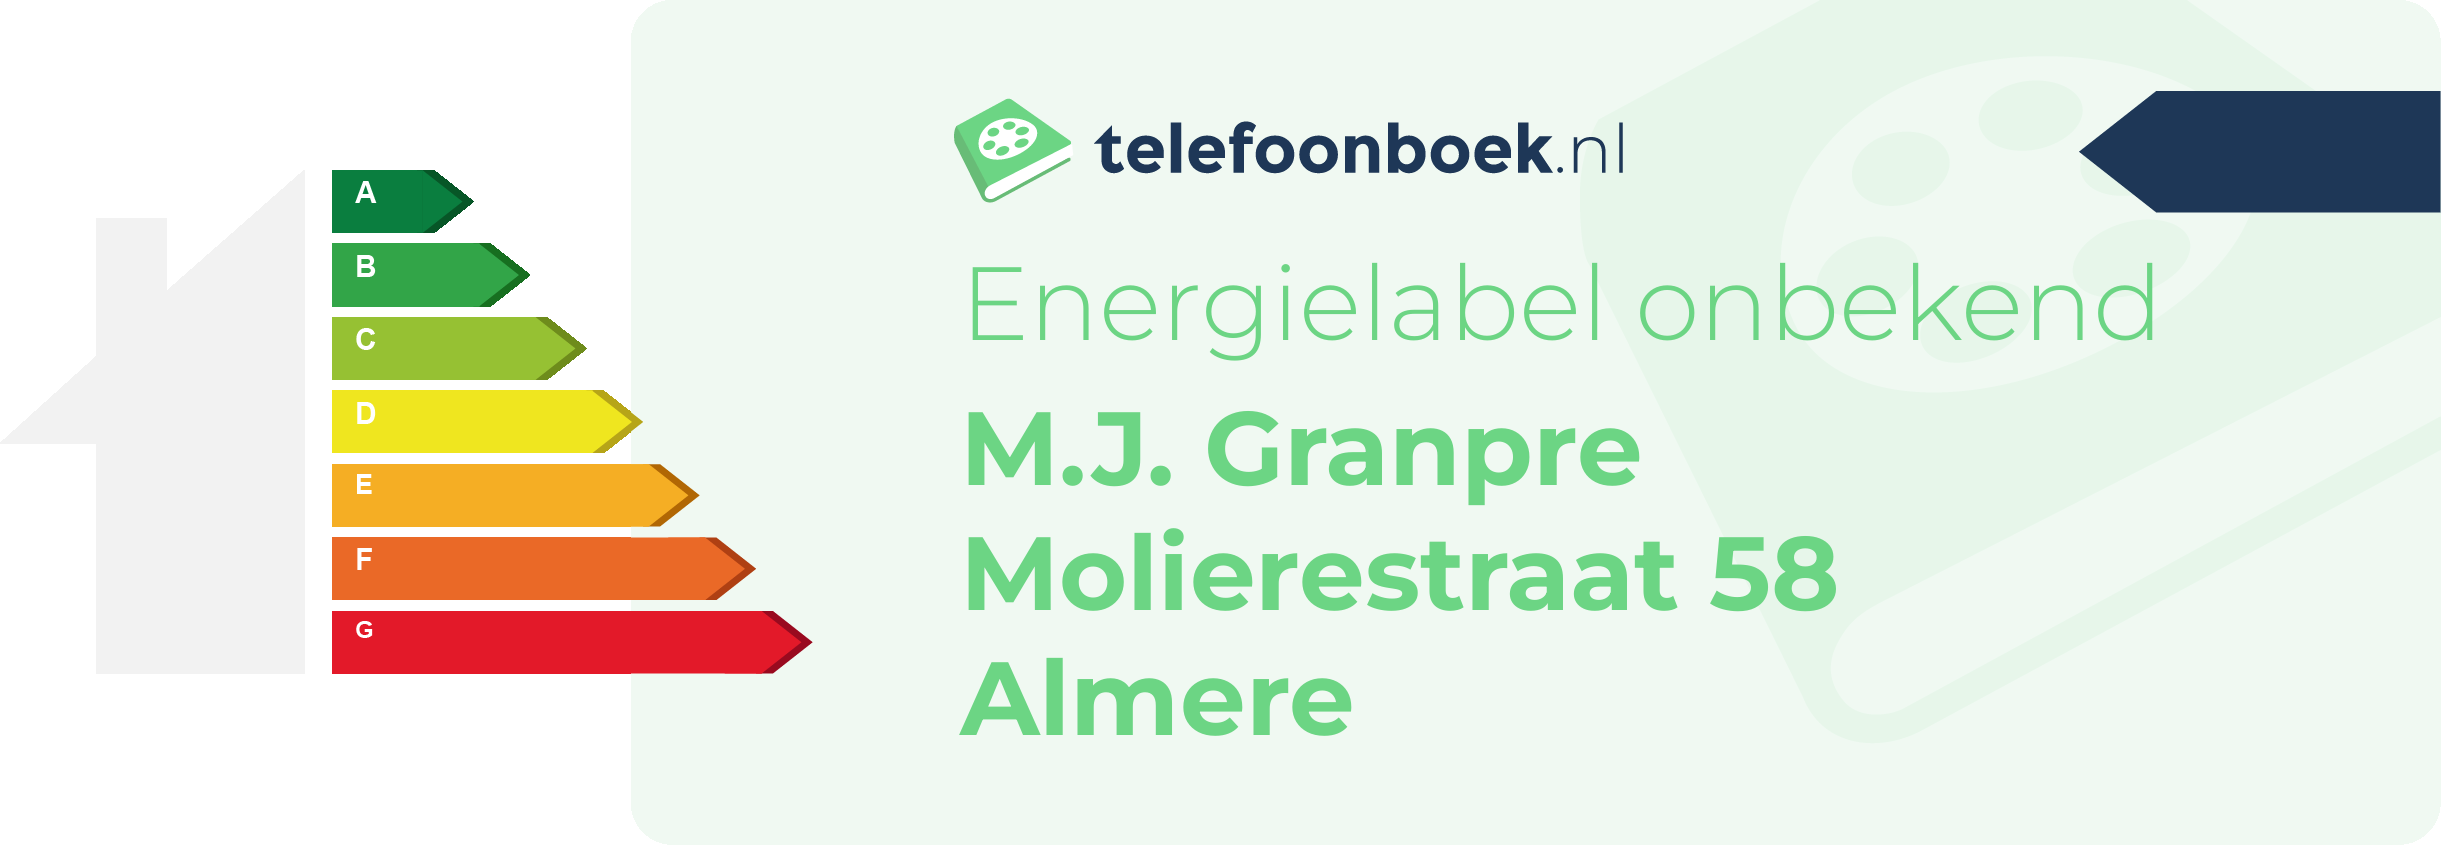 Energielabel M.J. Granpre Molierestraat 58 Almere